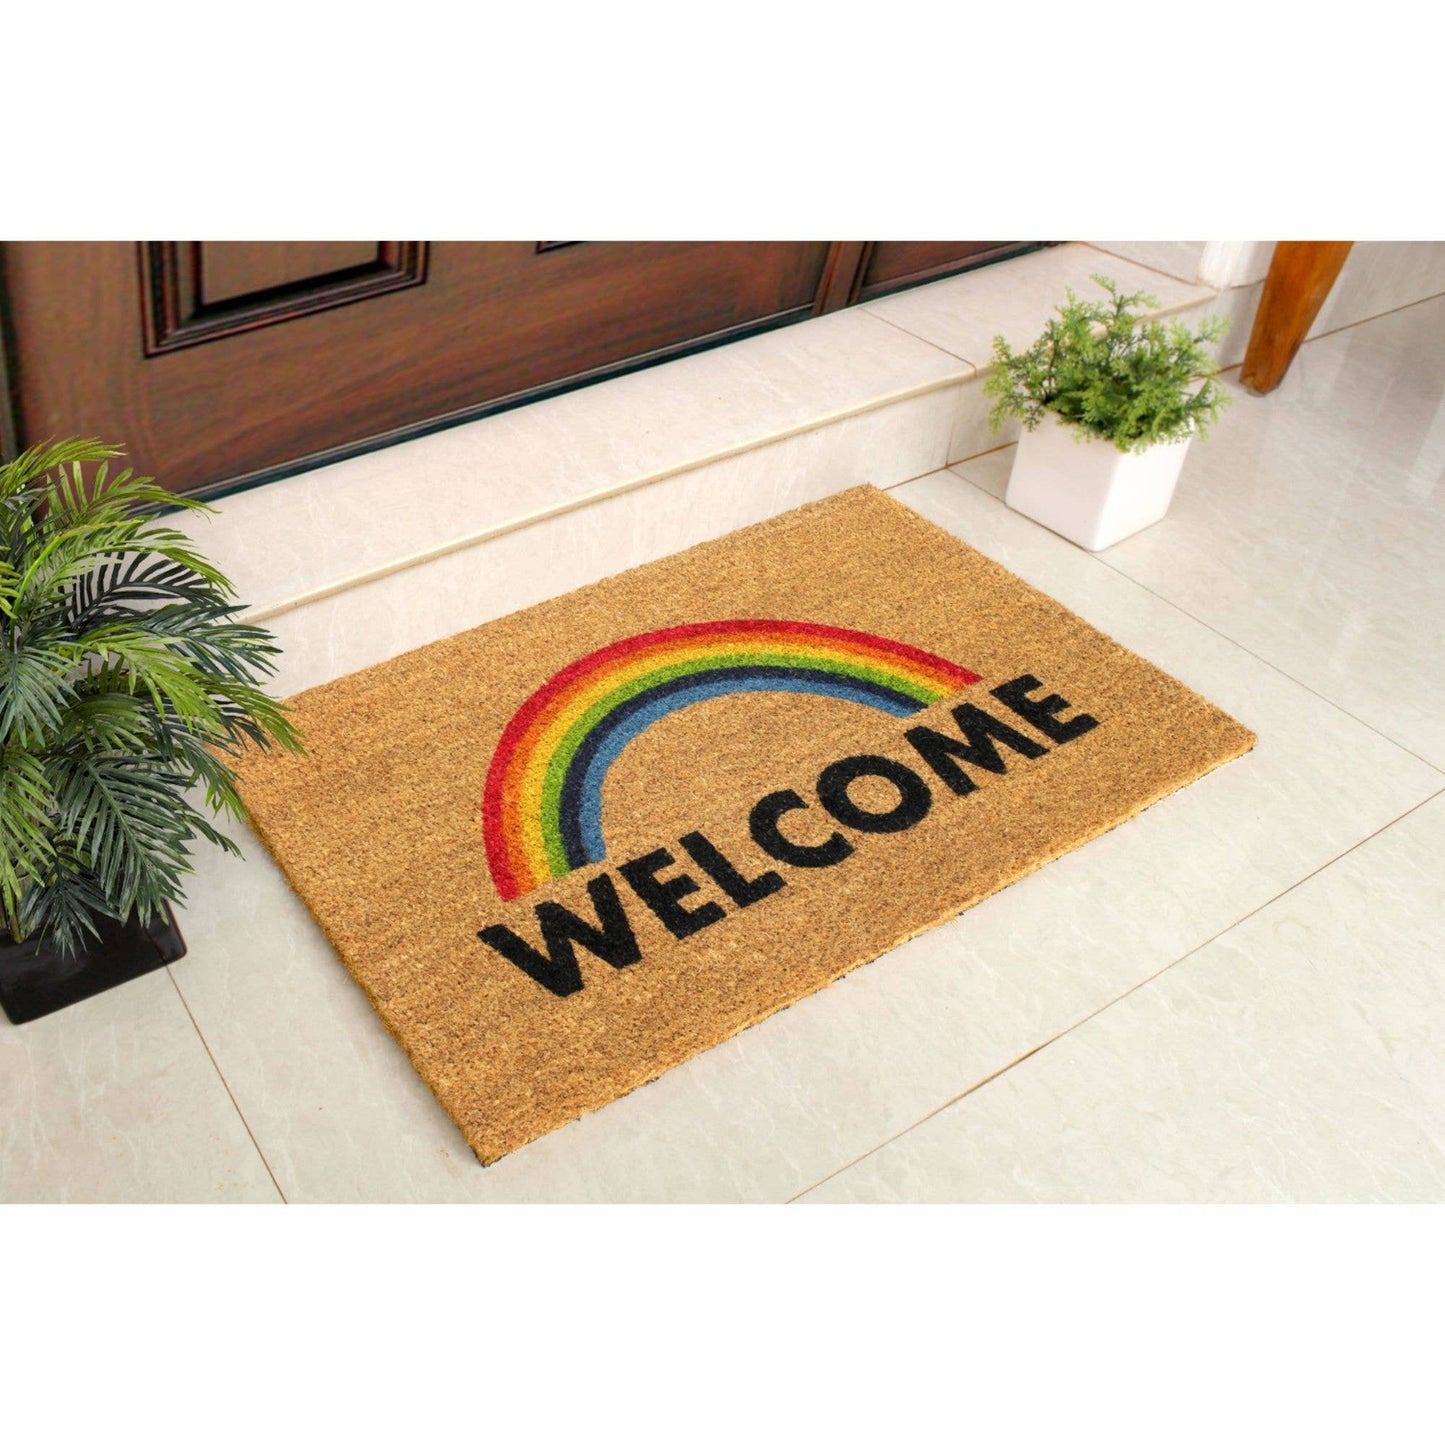 RugSmith Multi Tufted Welcome Rainbow Doormat, 18" x 30"Heart